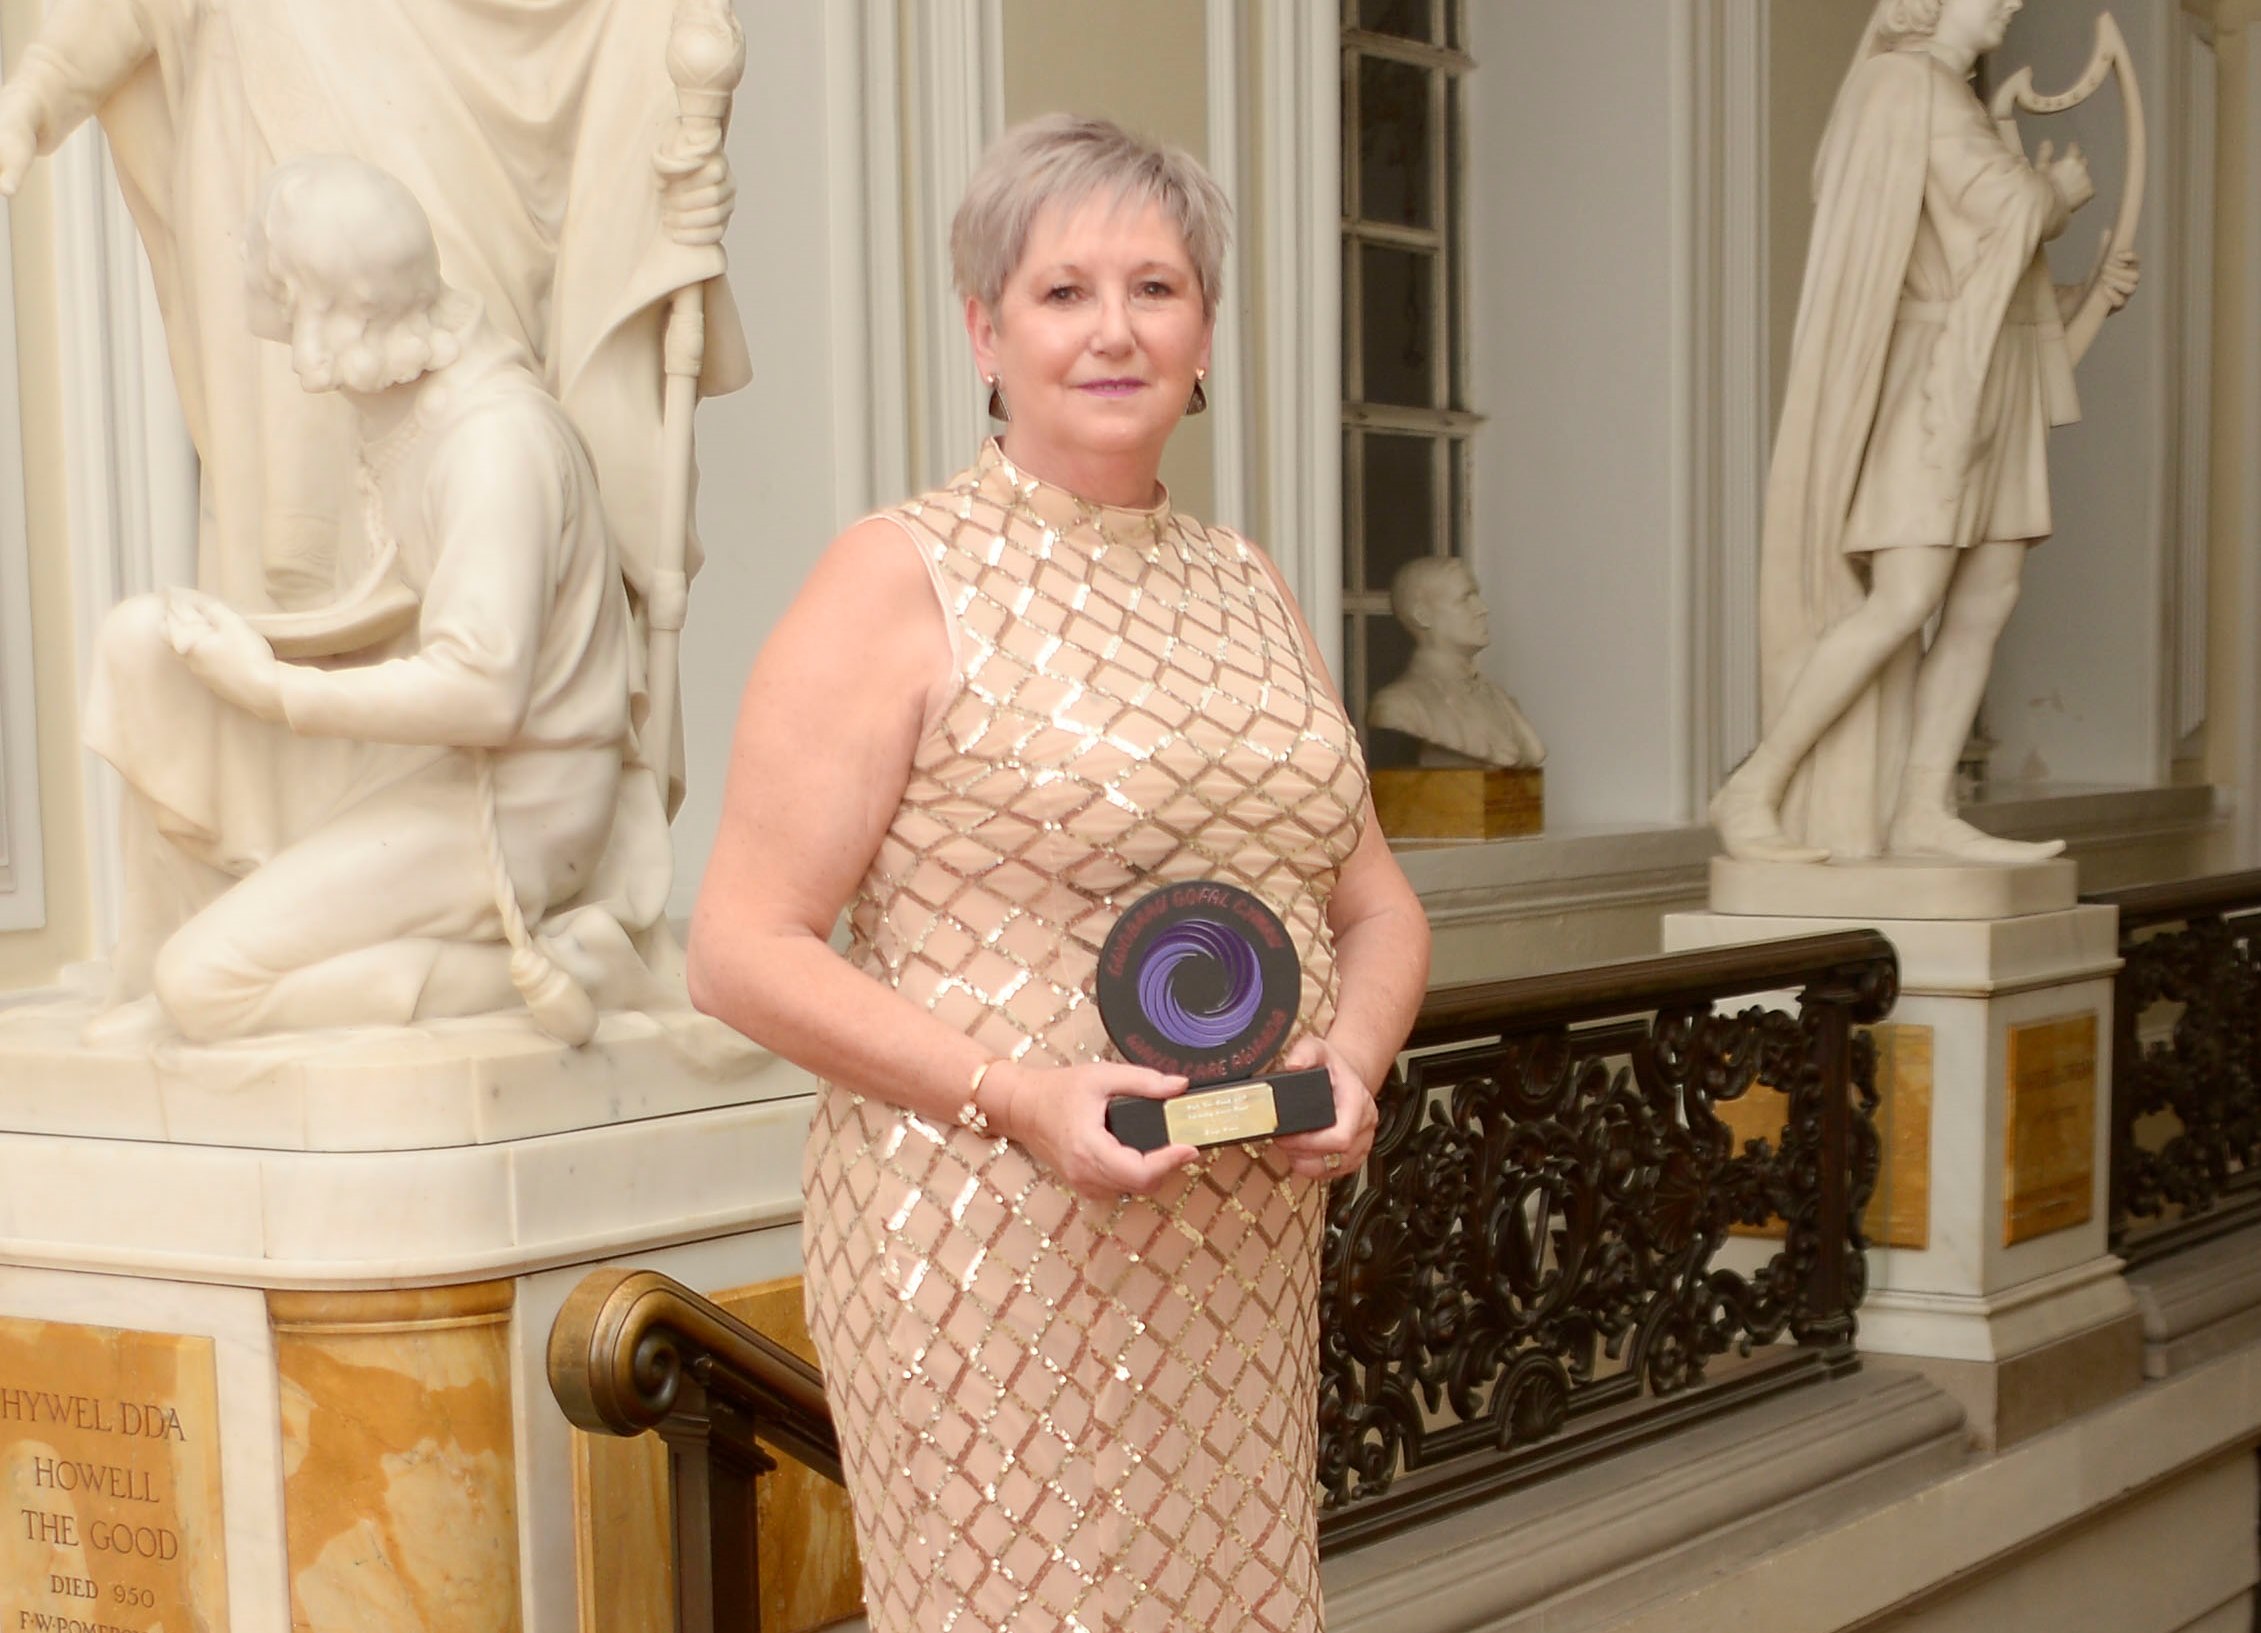 Dedicated care manager June celebrates national awards glory